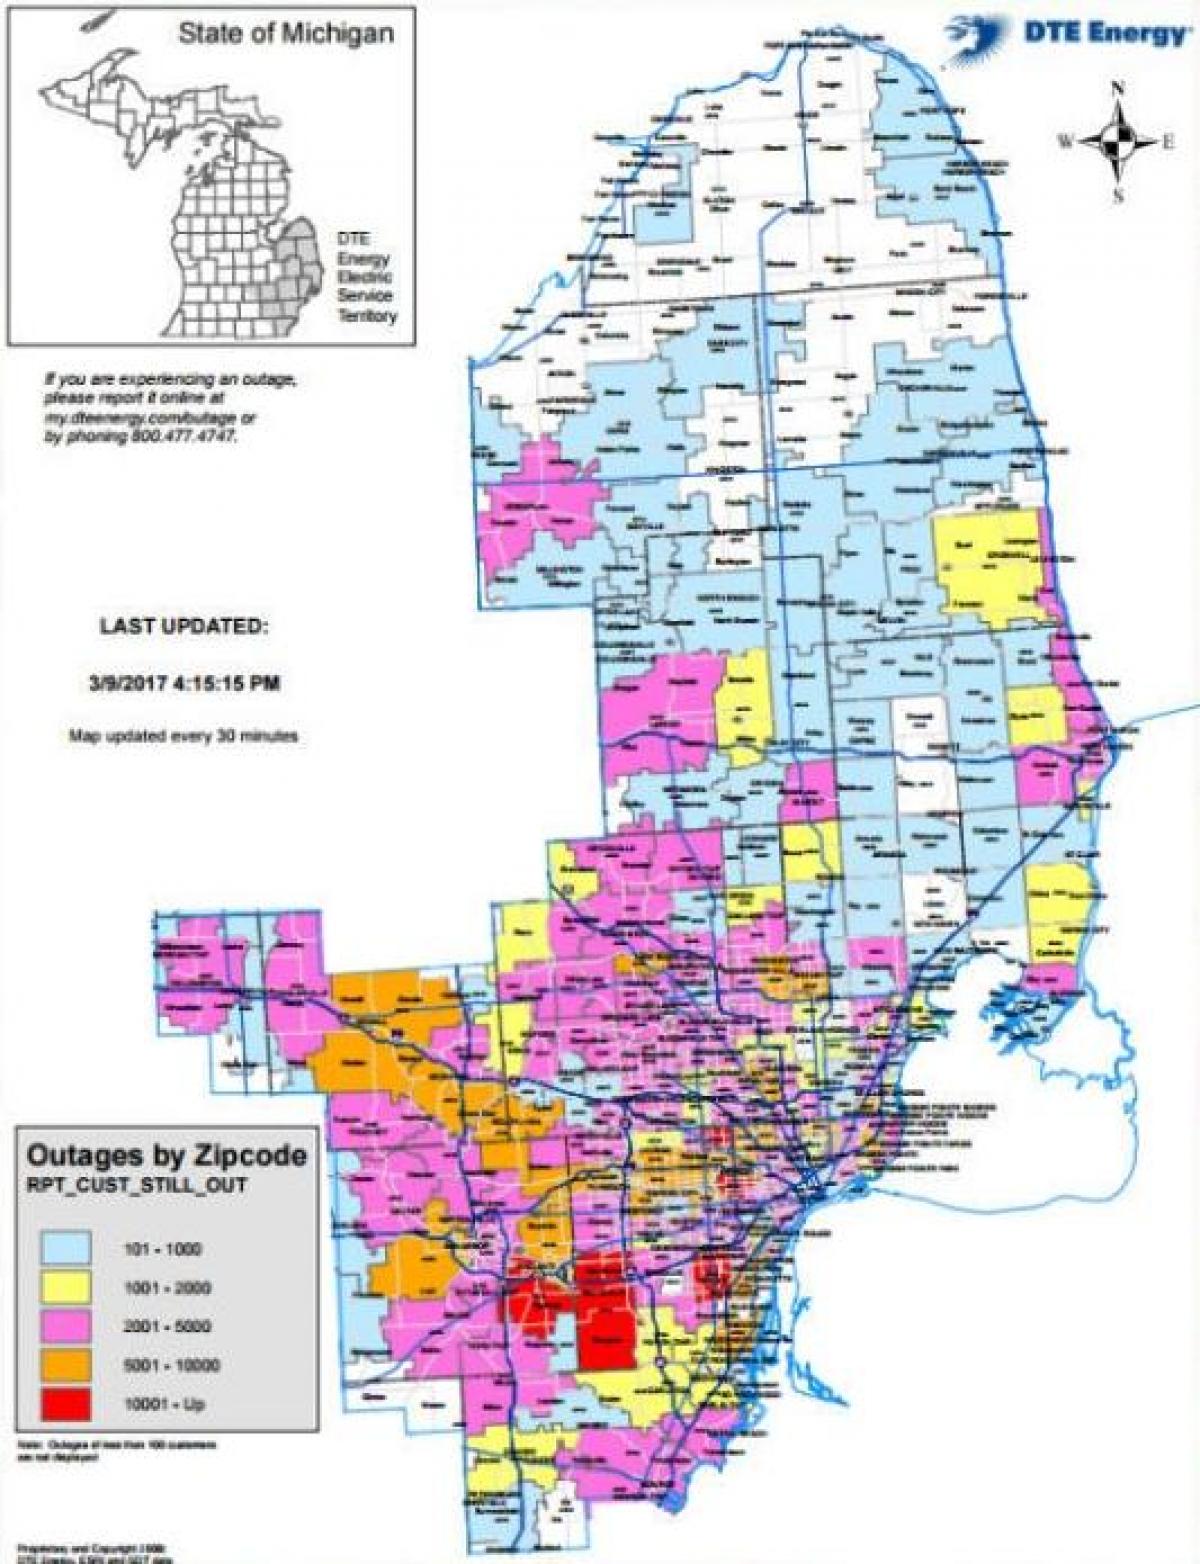 Detroit edison ძალა outage რუკა